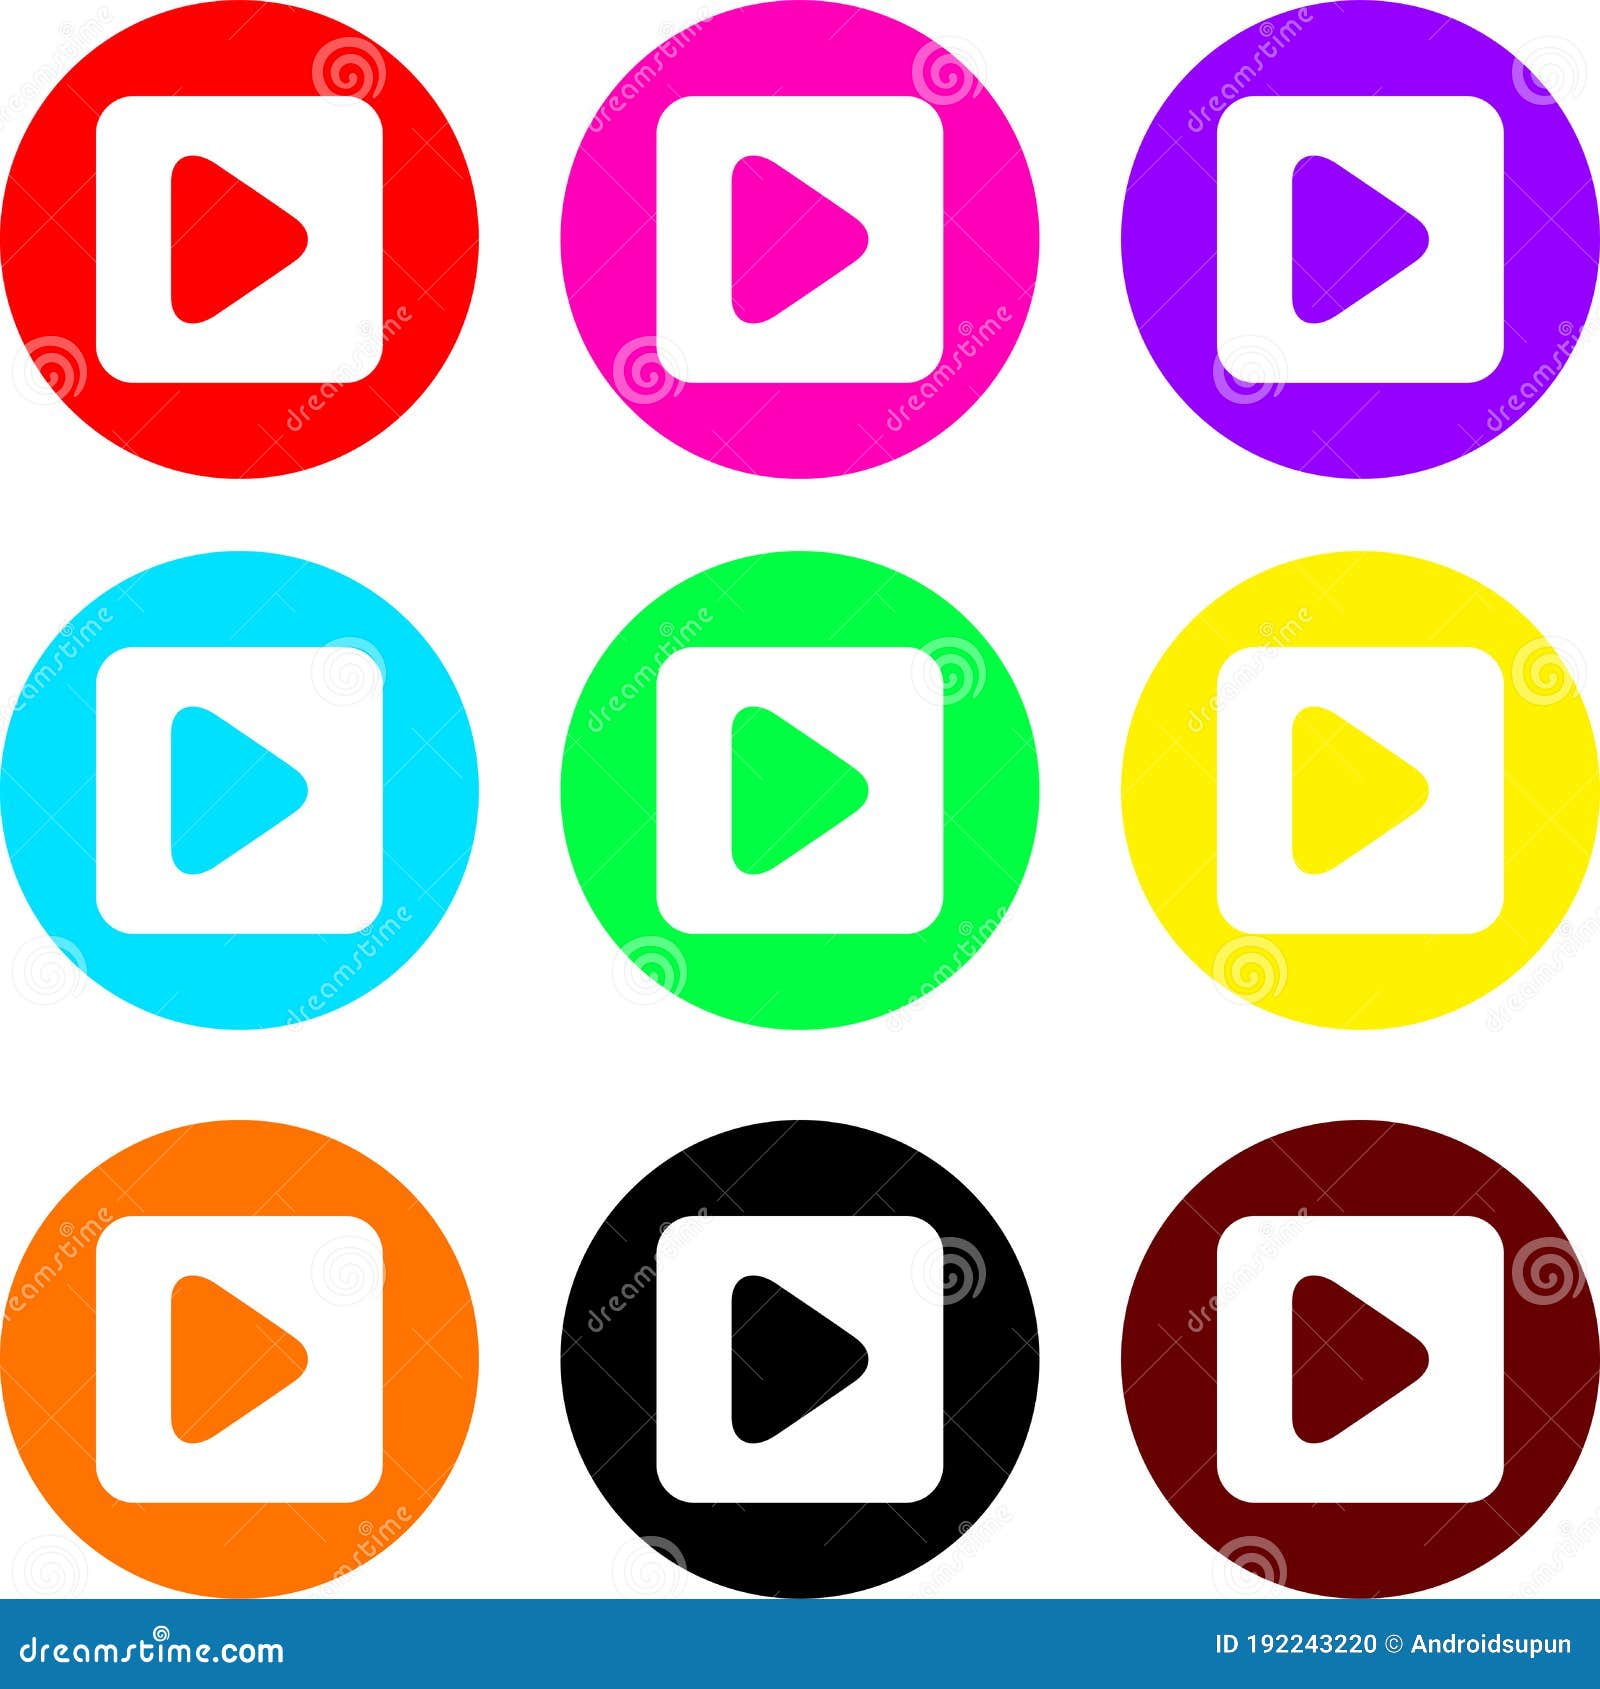 Youtube Cartoon Logo for Channels Stock Vector - Illustration of design,  multi: 192243220